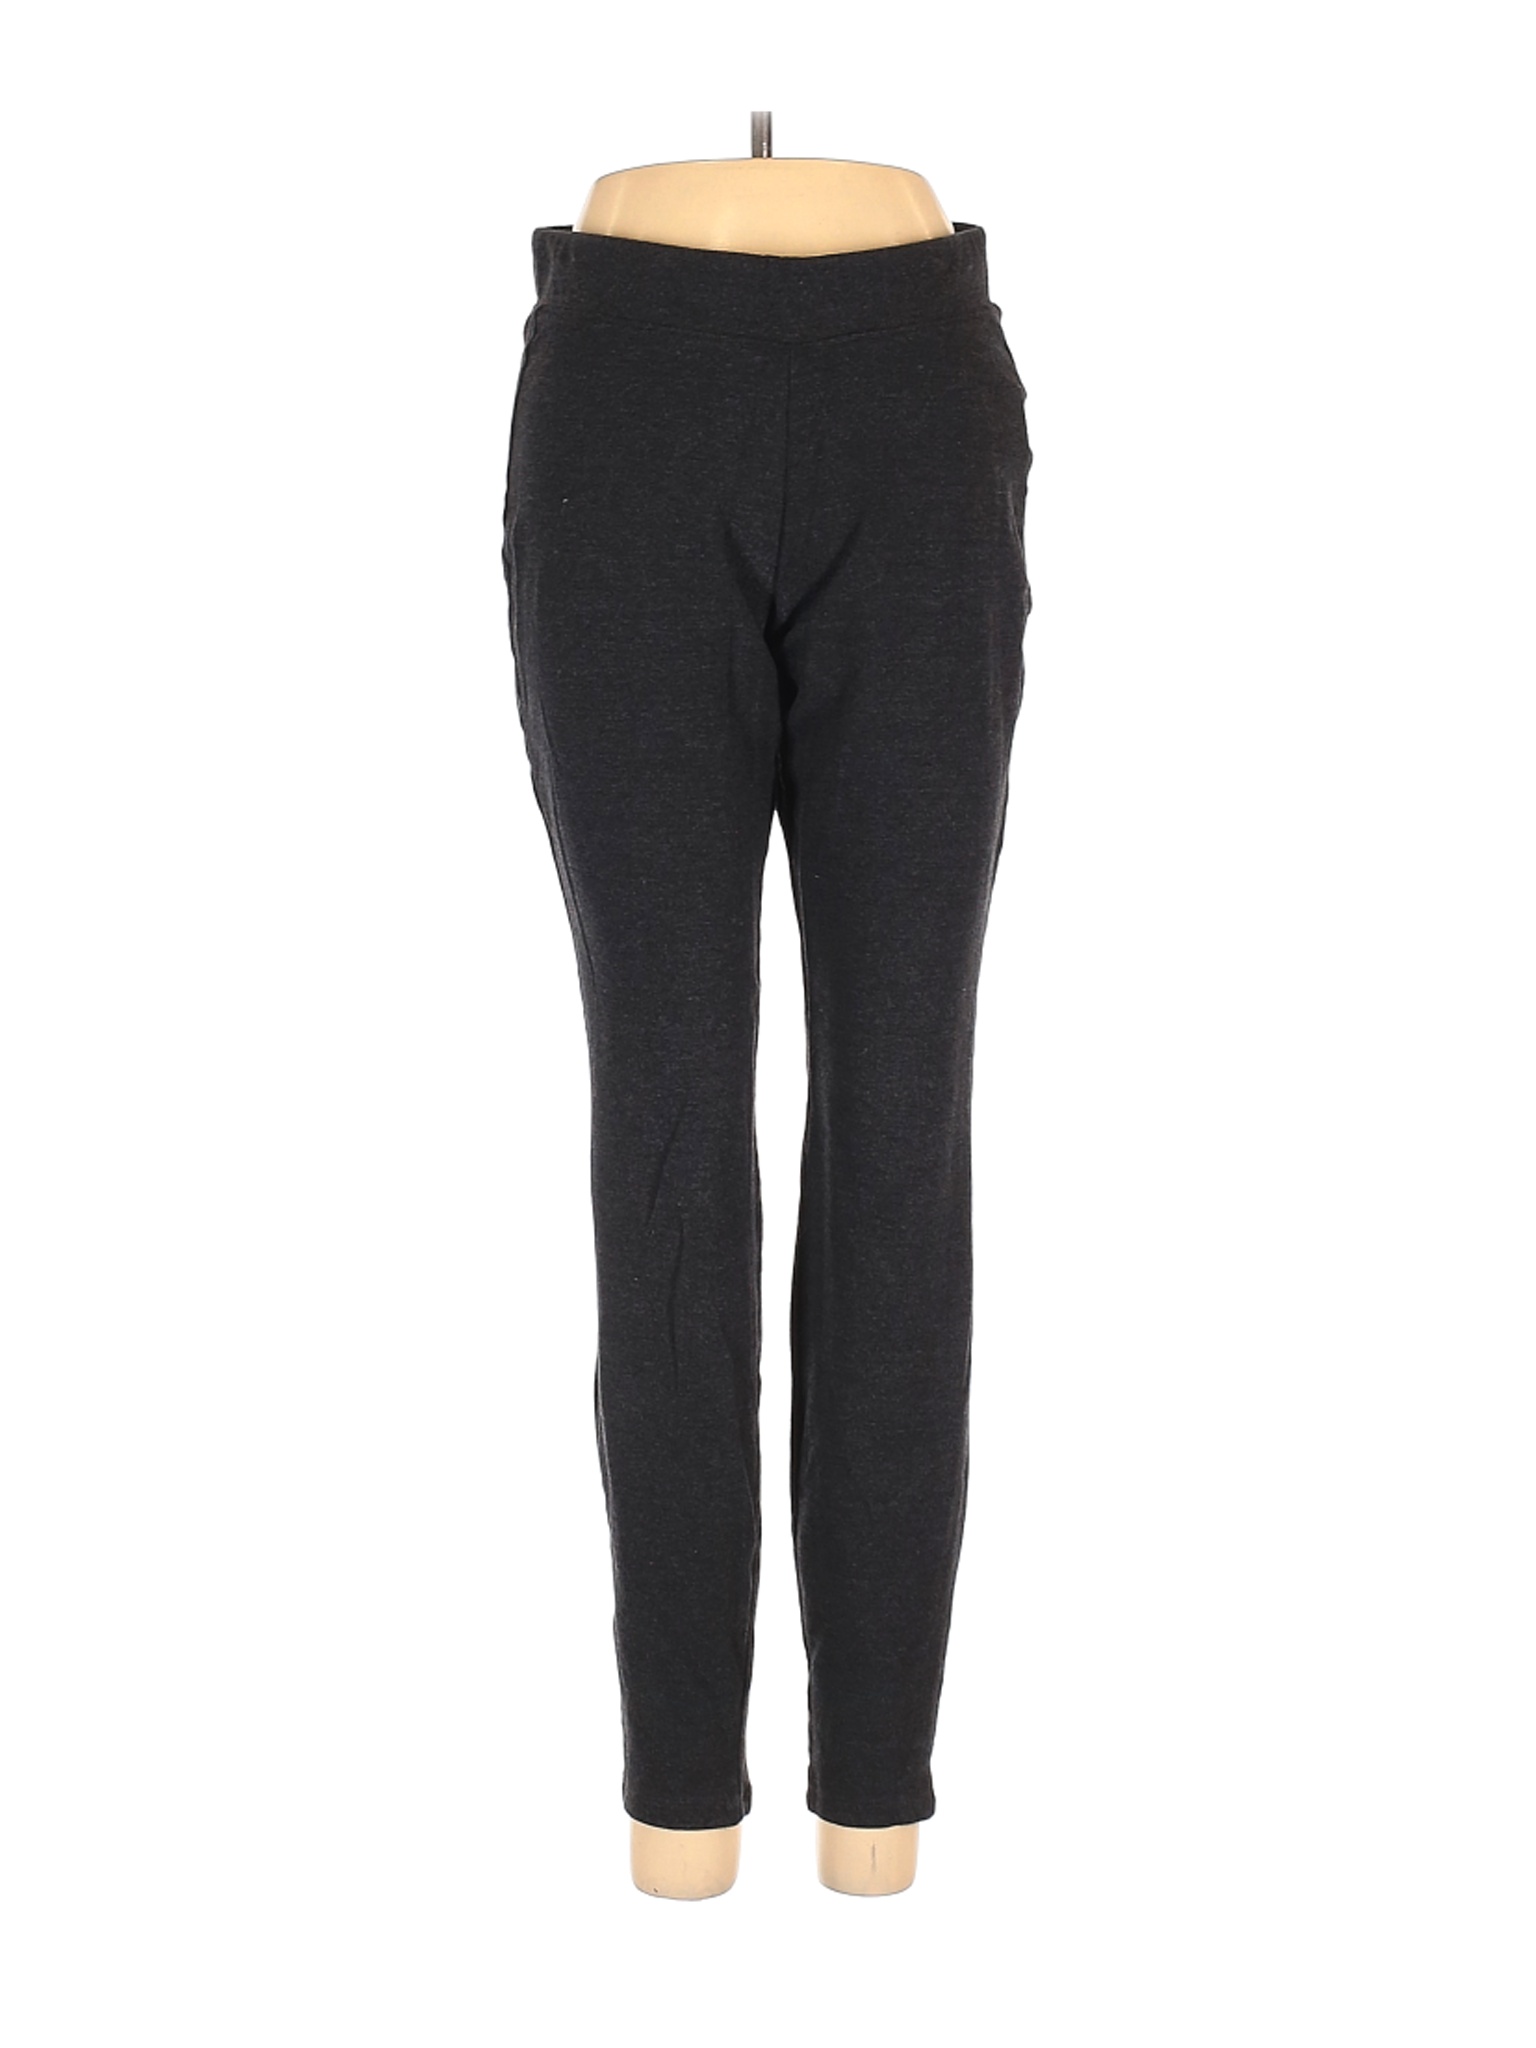 Old Navy Women Black Casual Pants S | eBay